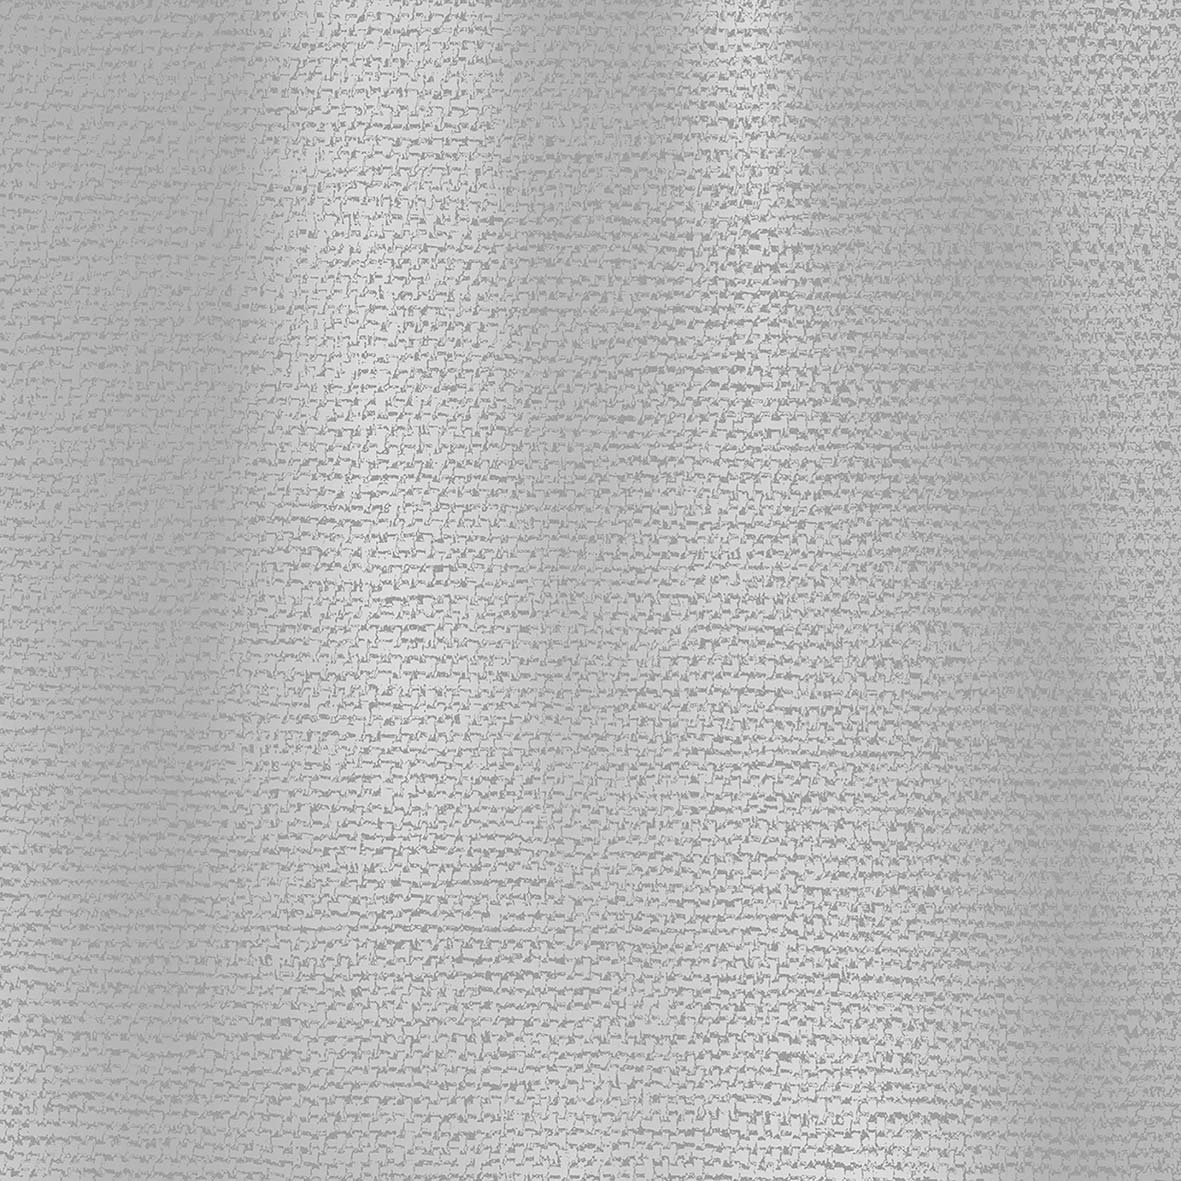 Napkins 33x33 cm - Canvas silver Napkin 33x33